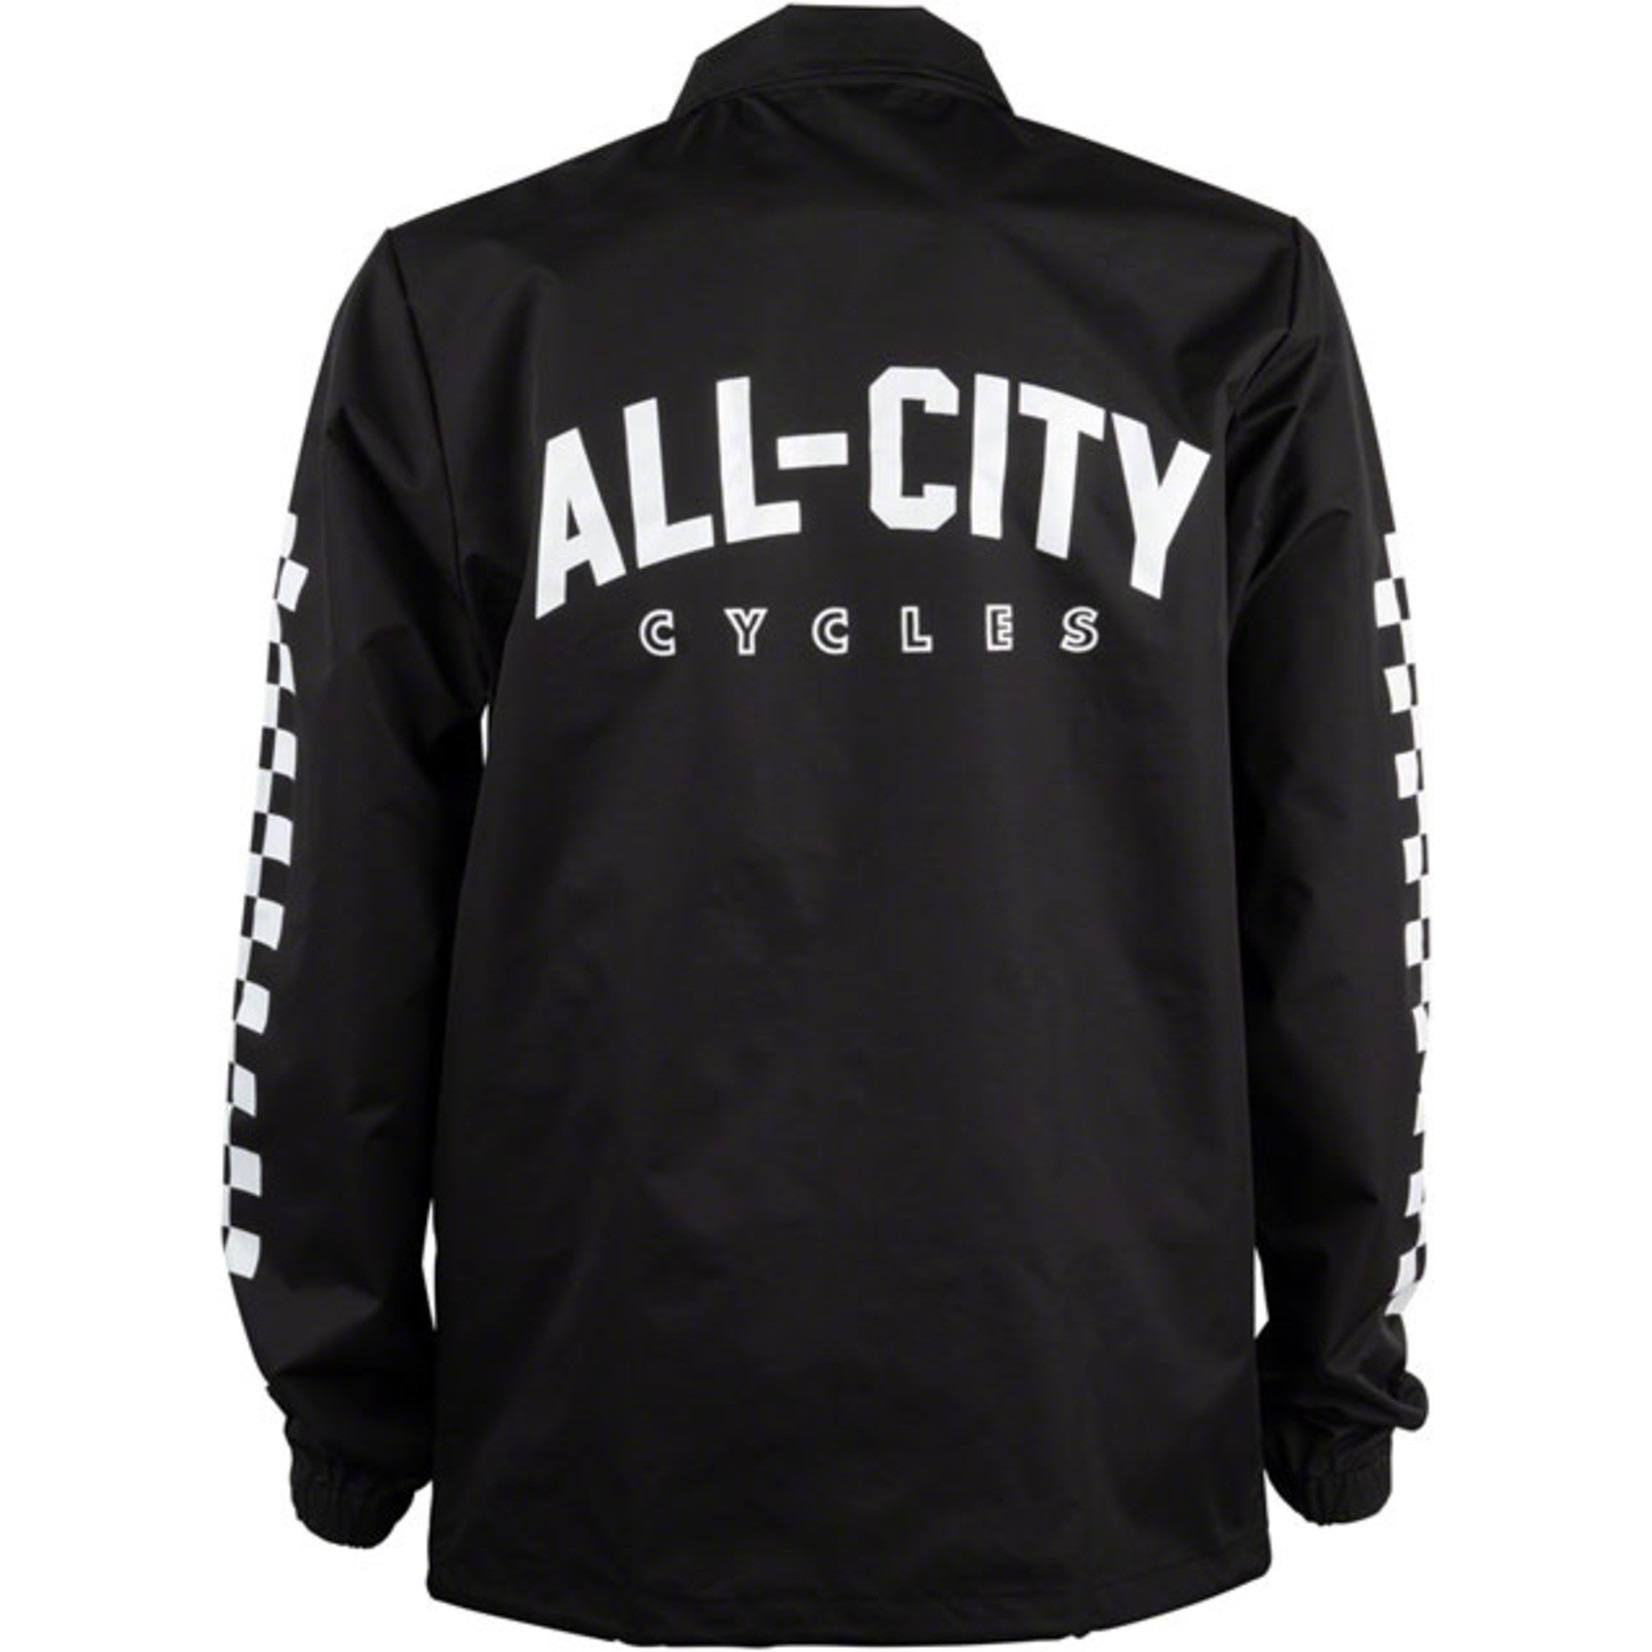 All-City All City Tu Tone Jacket - White, Black, Medium